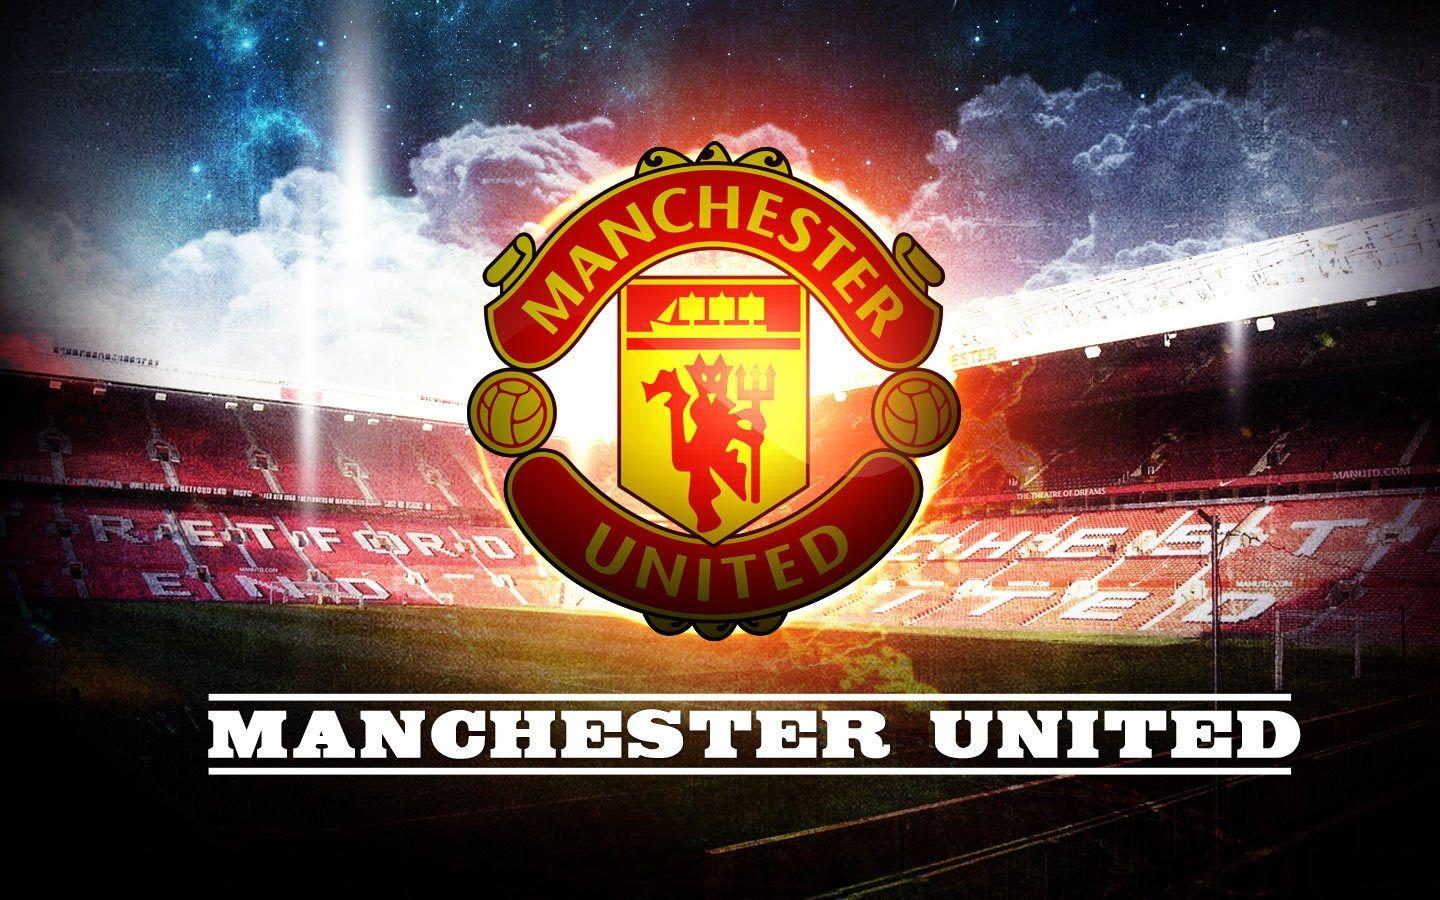 Manchester United Logo Football Club Wallpaper Wallpaper. Manchester united wallpaper, Manchester united logo, Manchester united